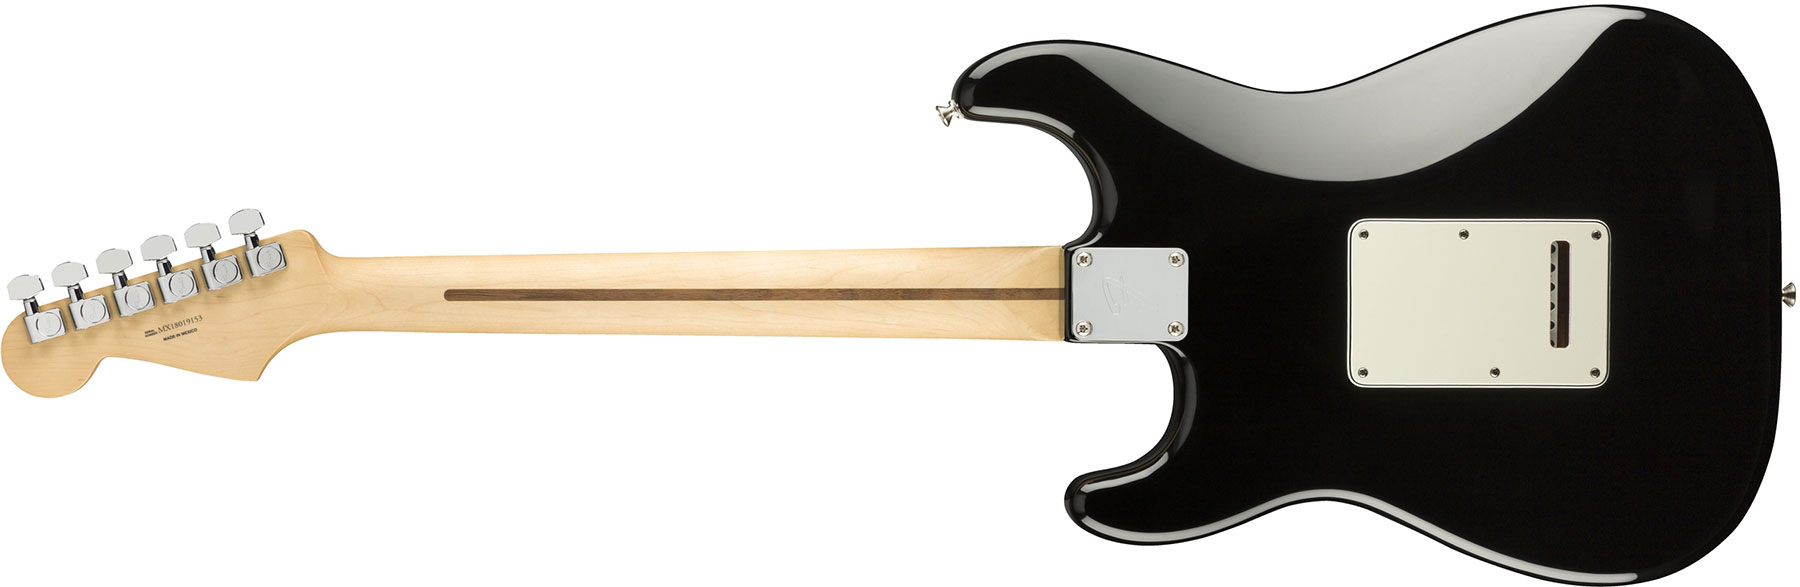 Fender Strat Player Mex Hss Pf - Black - Guitarra eléctrica con forma de str. - Variation 1